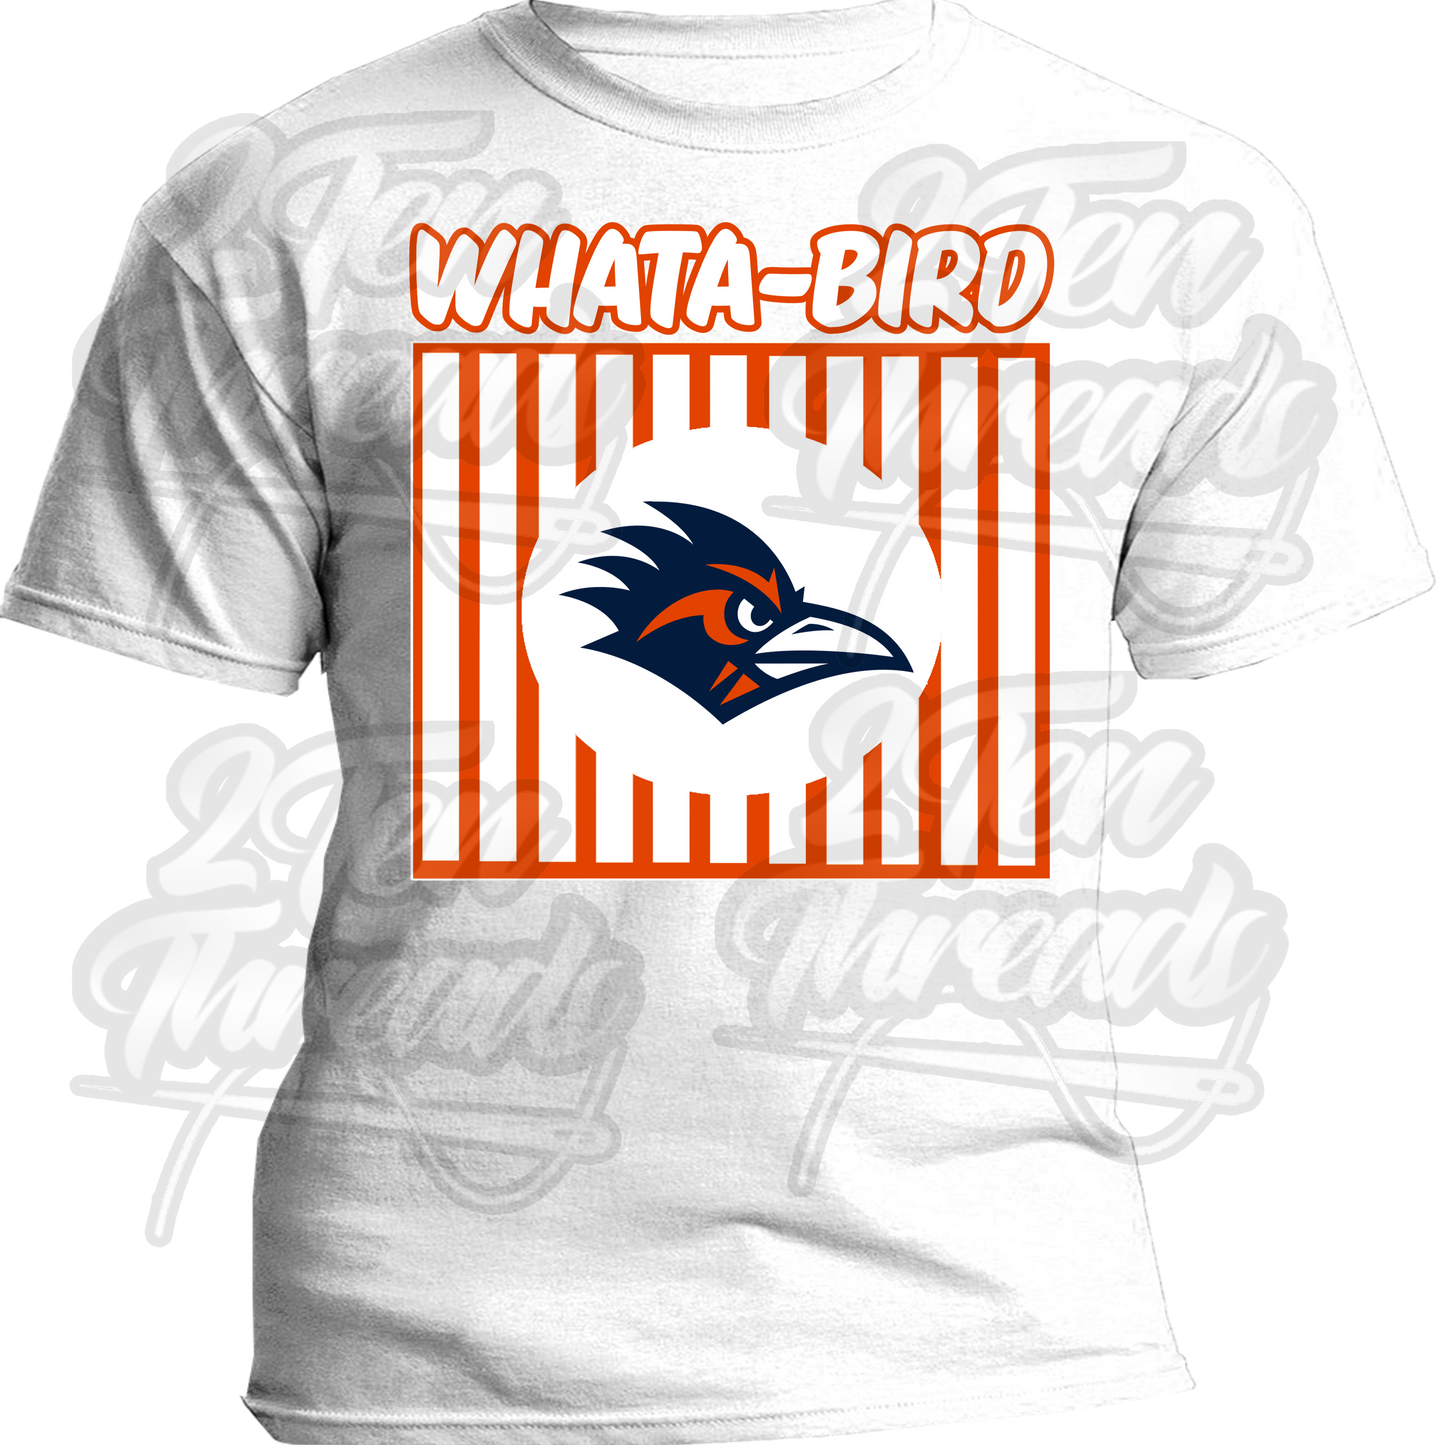 Whata-bird shirt